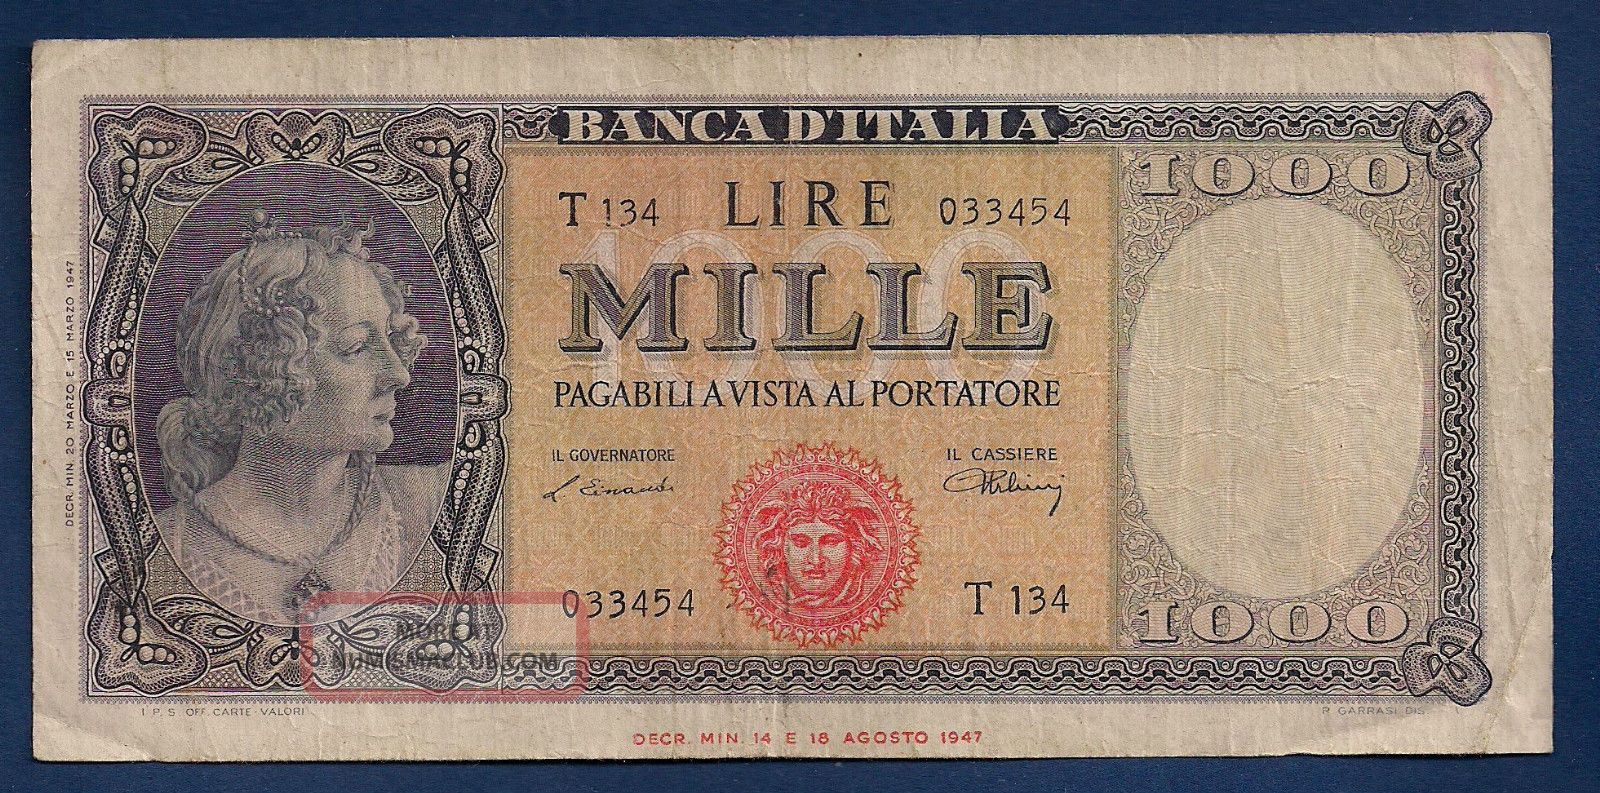 Italy 1, 000 (1000) Lire 1947 P - 83 Medusa Seal Post Ww2 Italian Note